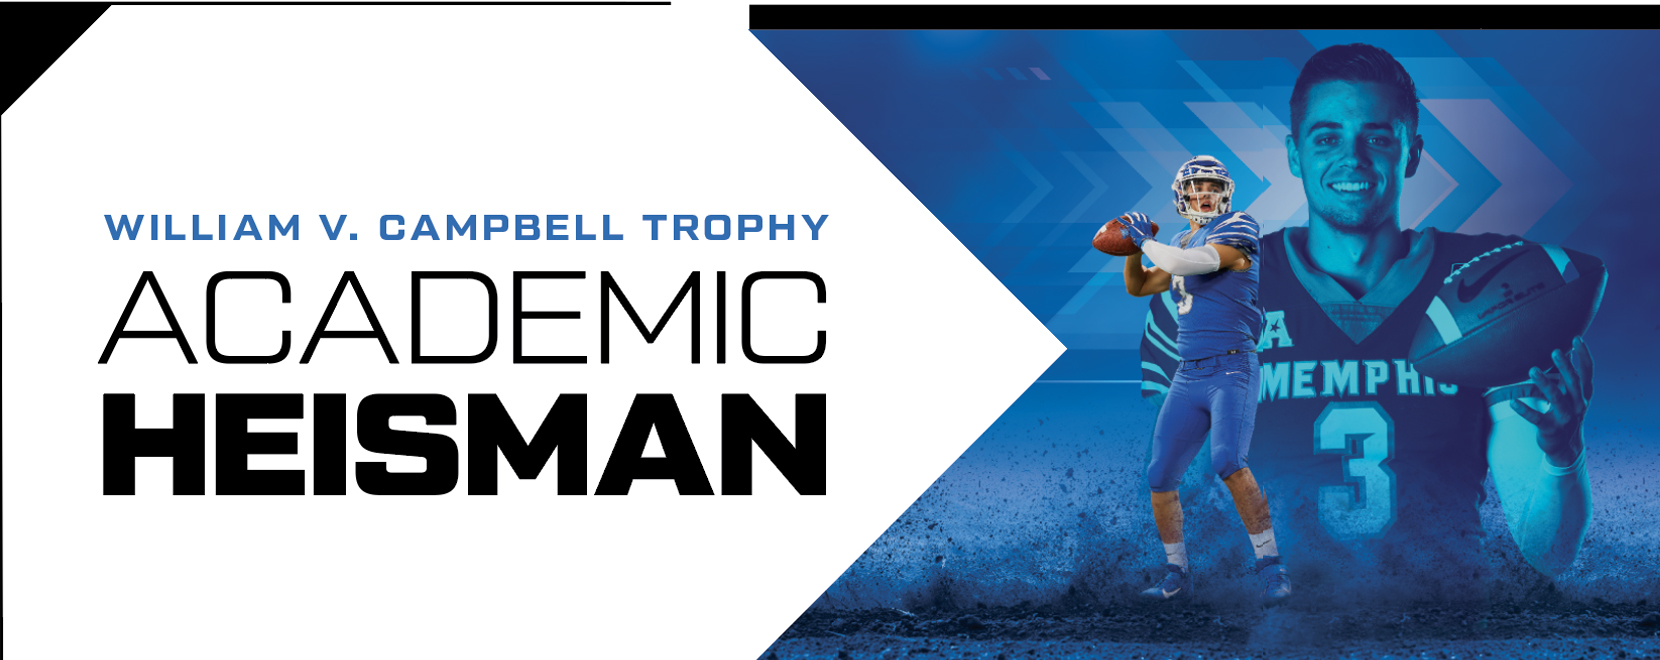 Brady White | William V. Campbell Trophy, Academic Heisman